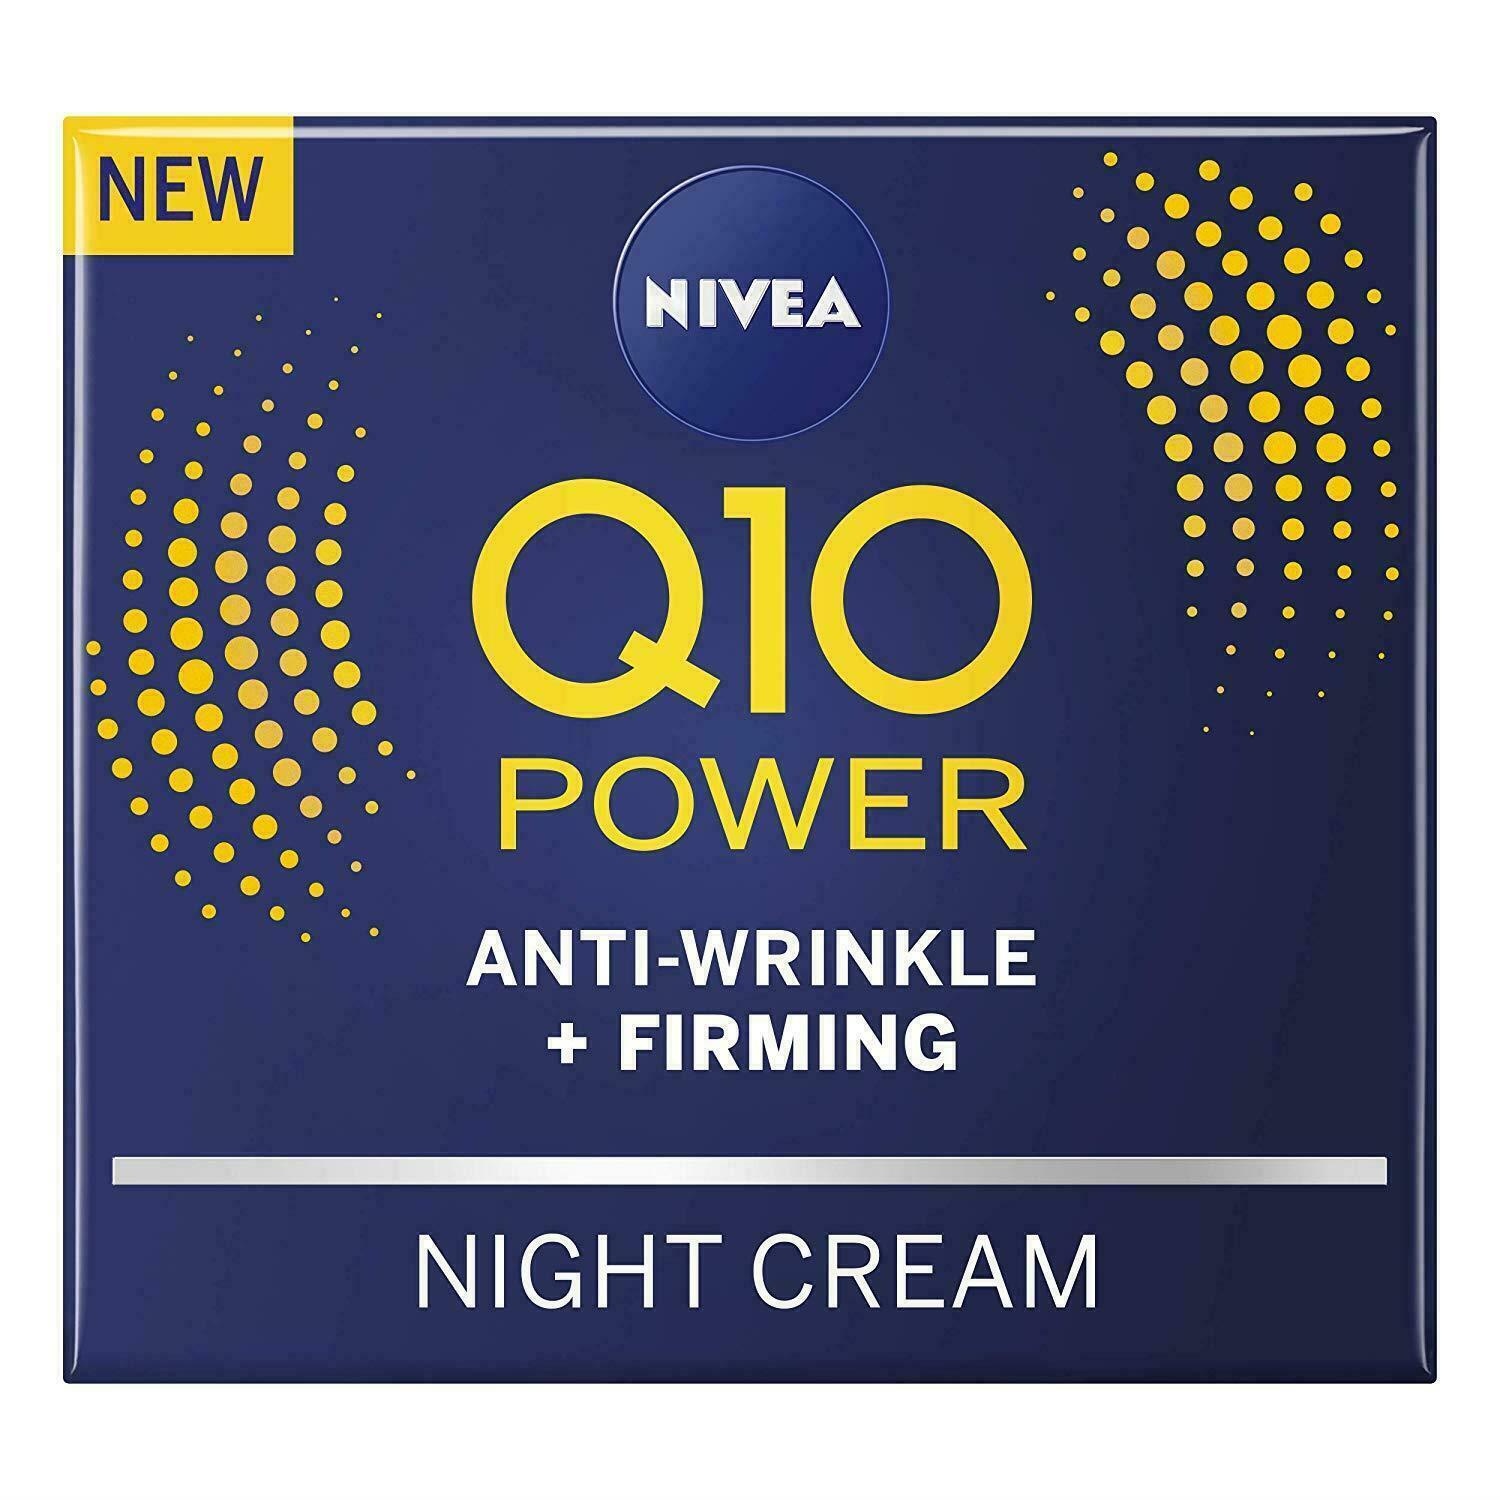 NIVEA Visage Q10 Night Cream - 50ml for sale online | eBay